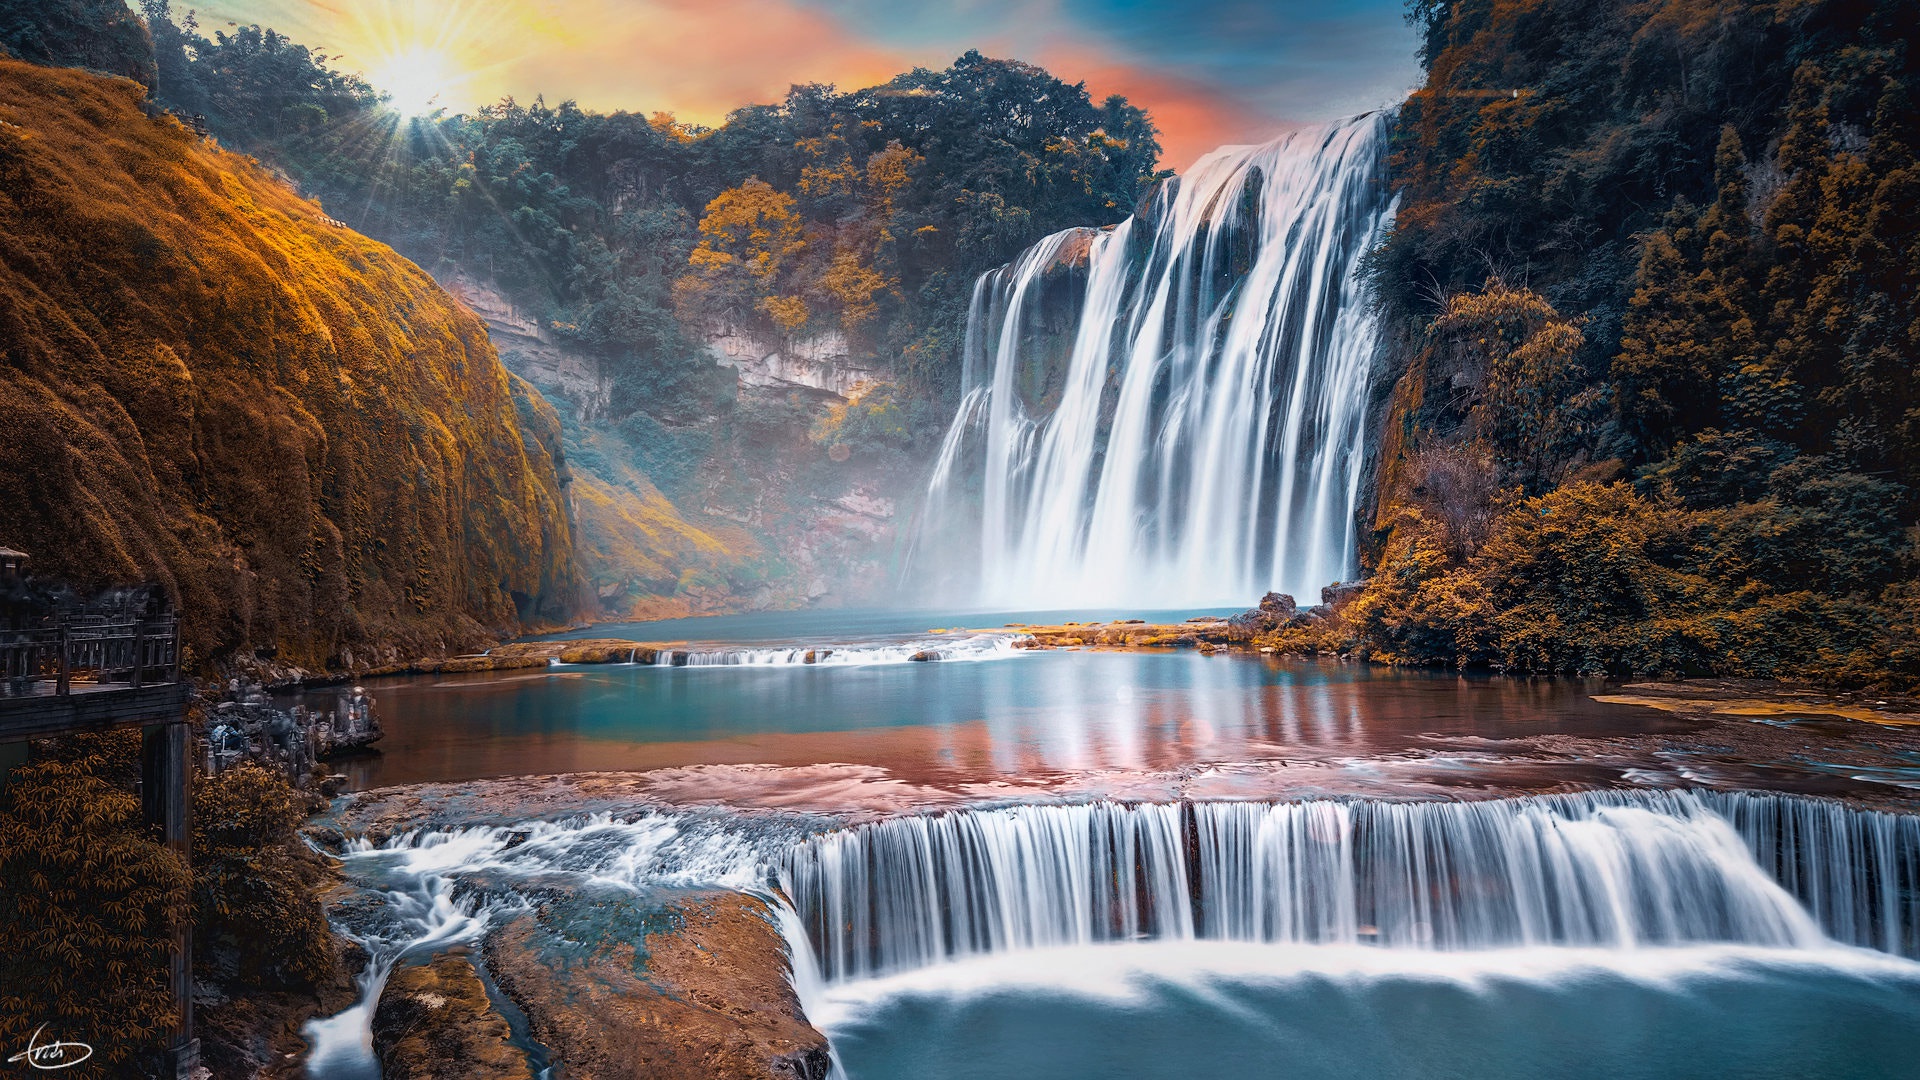 Waterfall Sunset Background Wallpaper